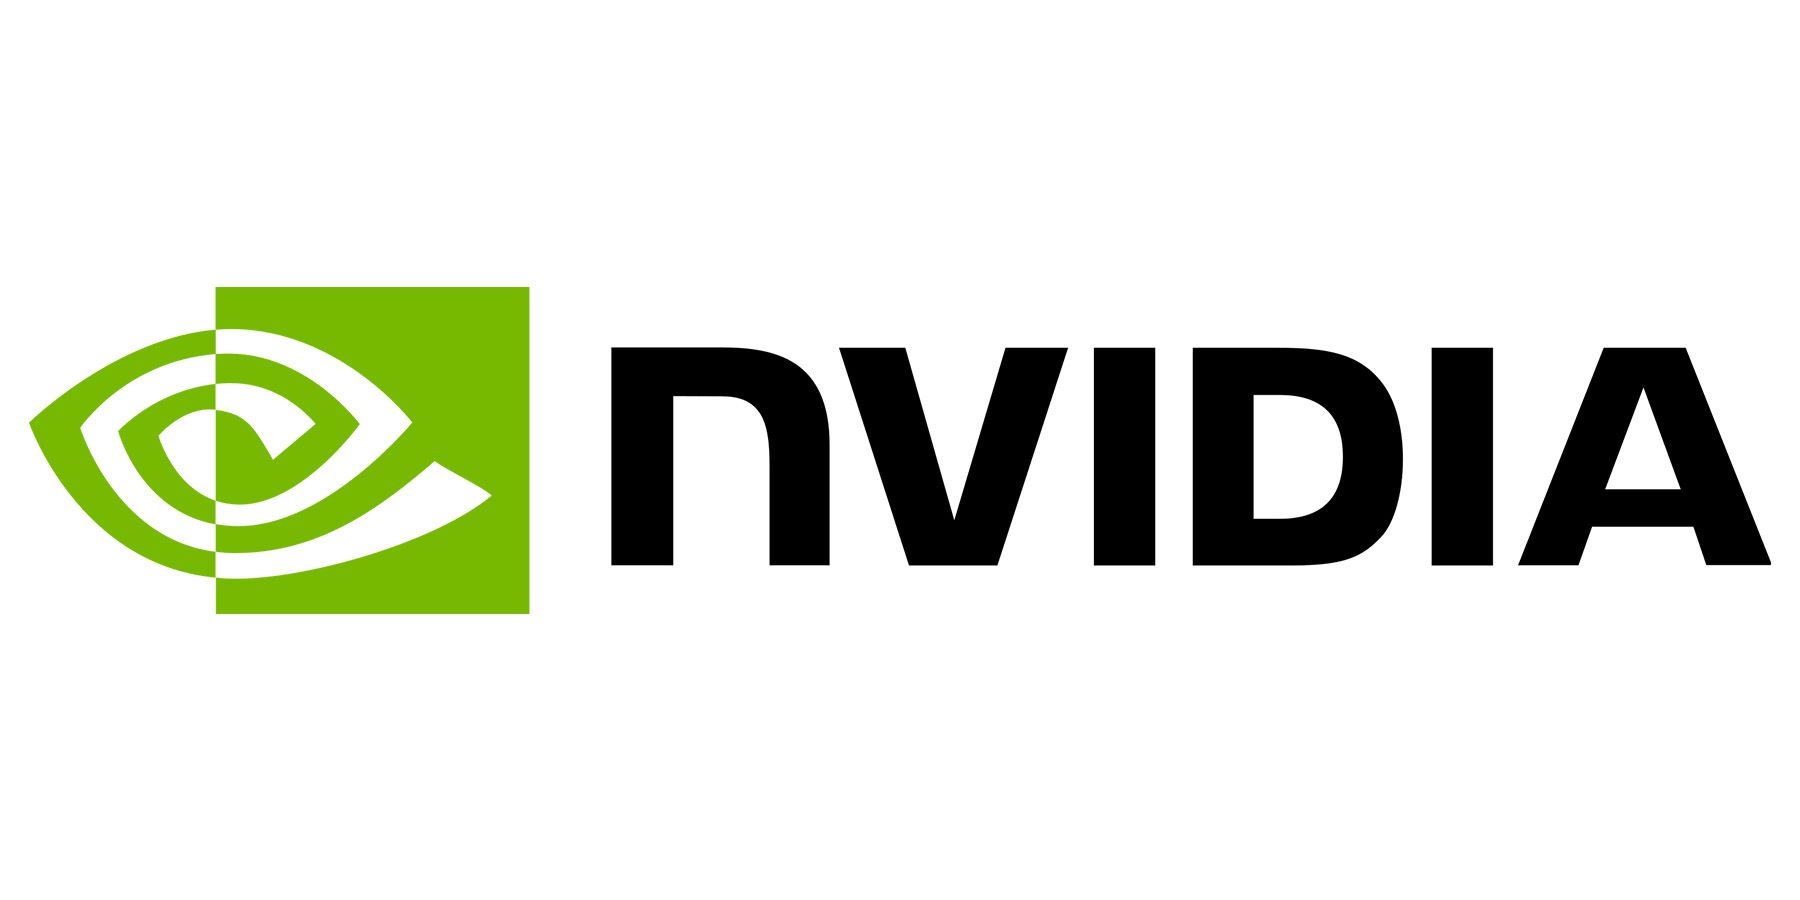 Nvidia logo over white background